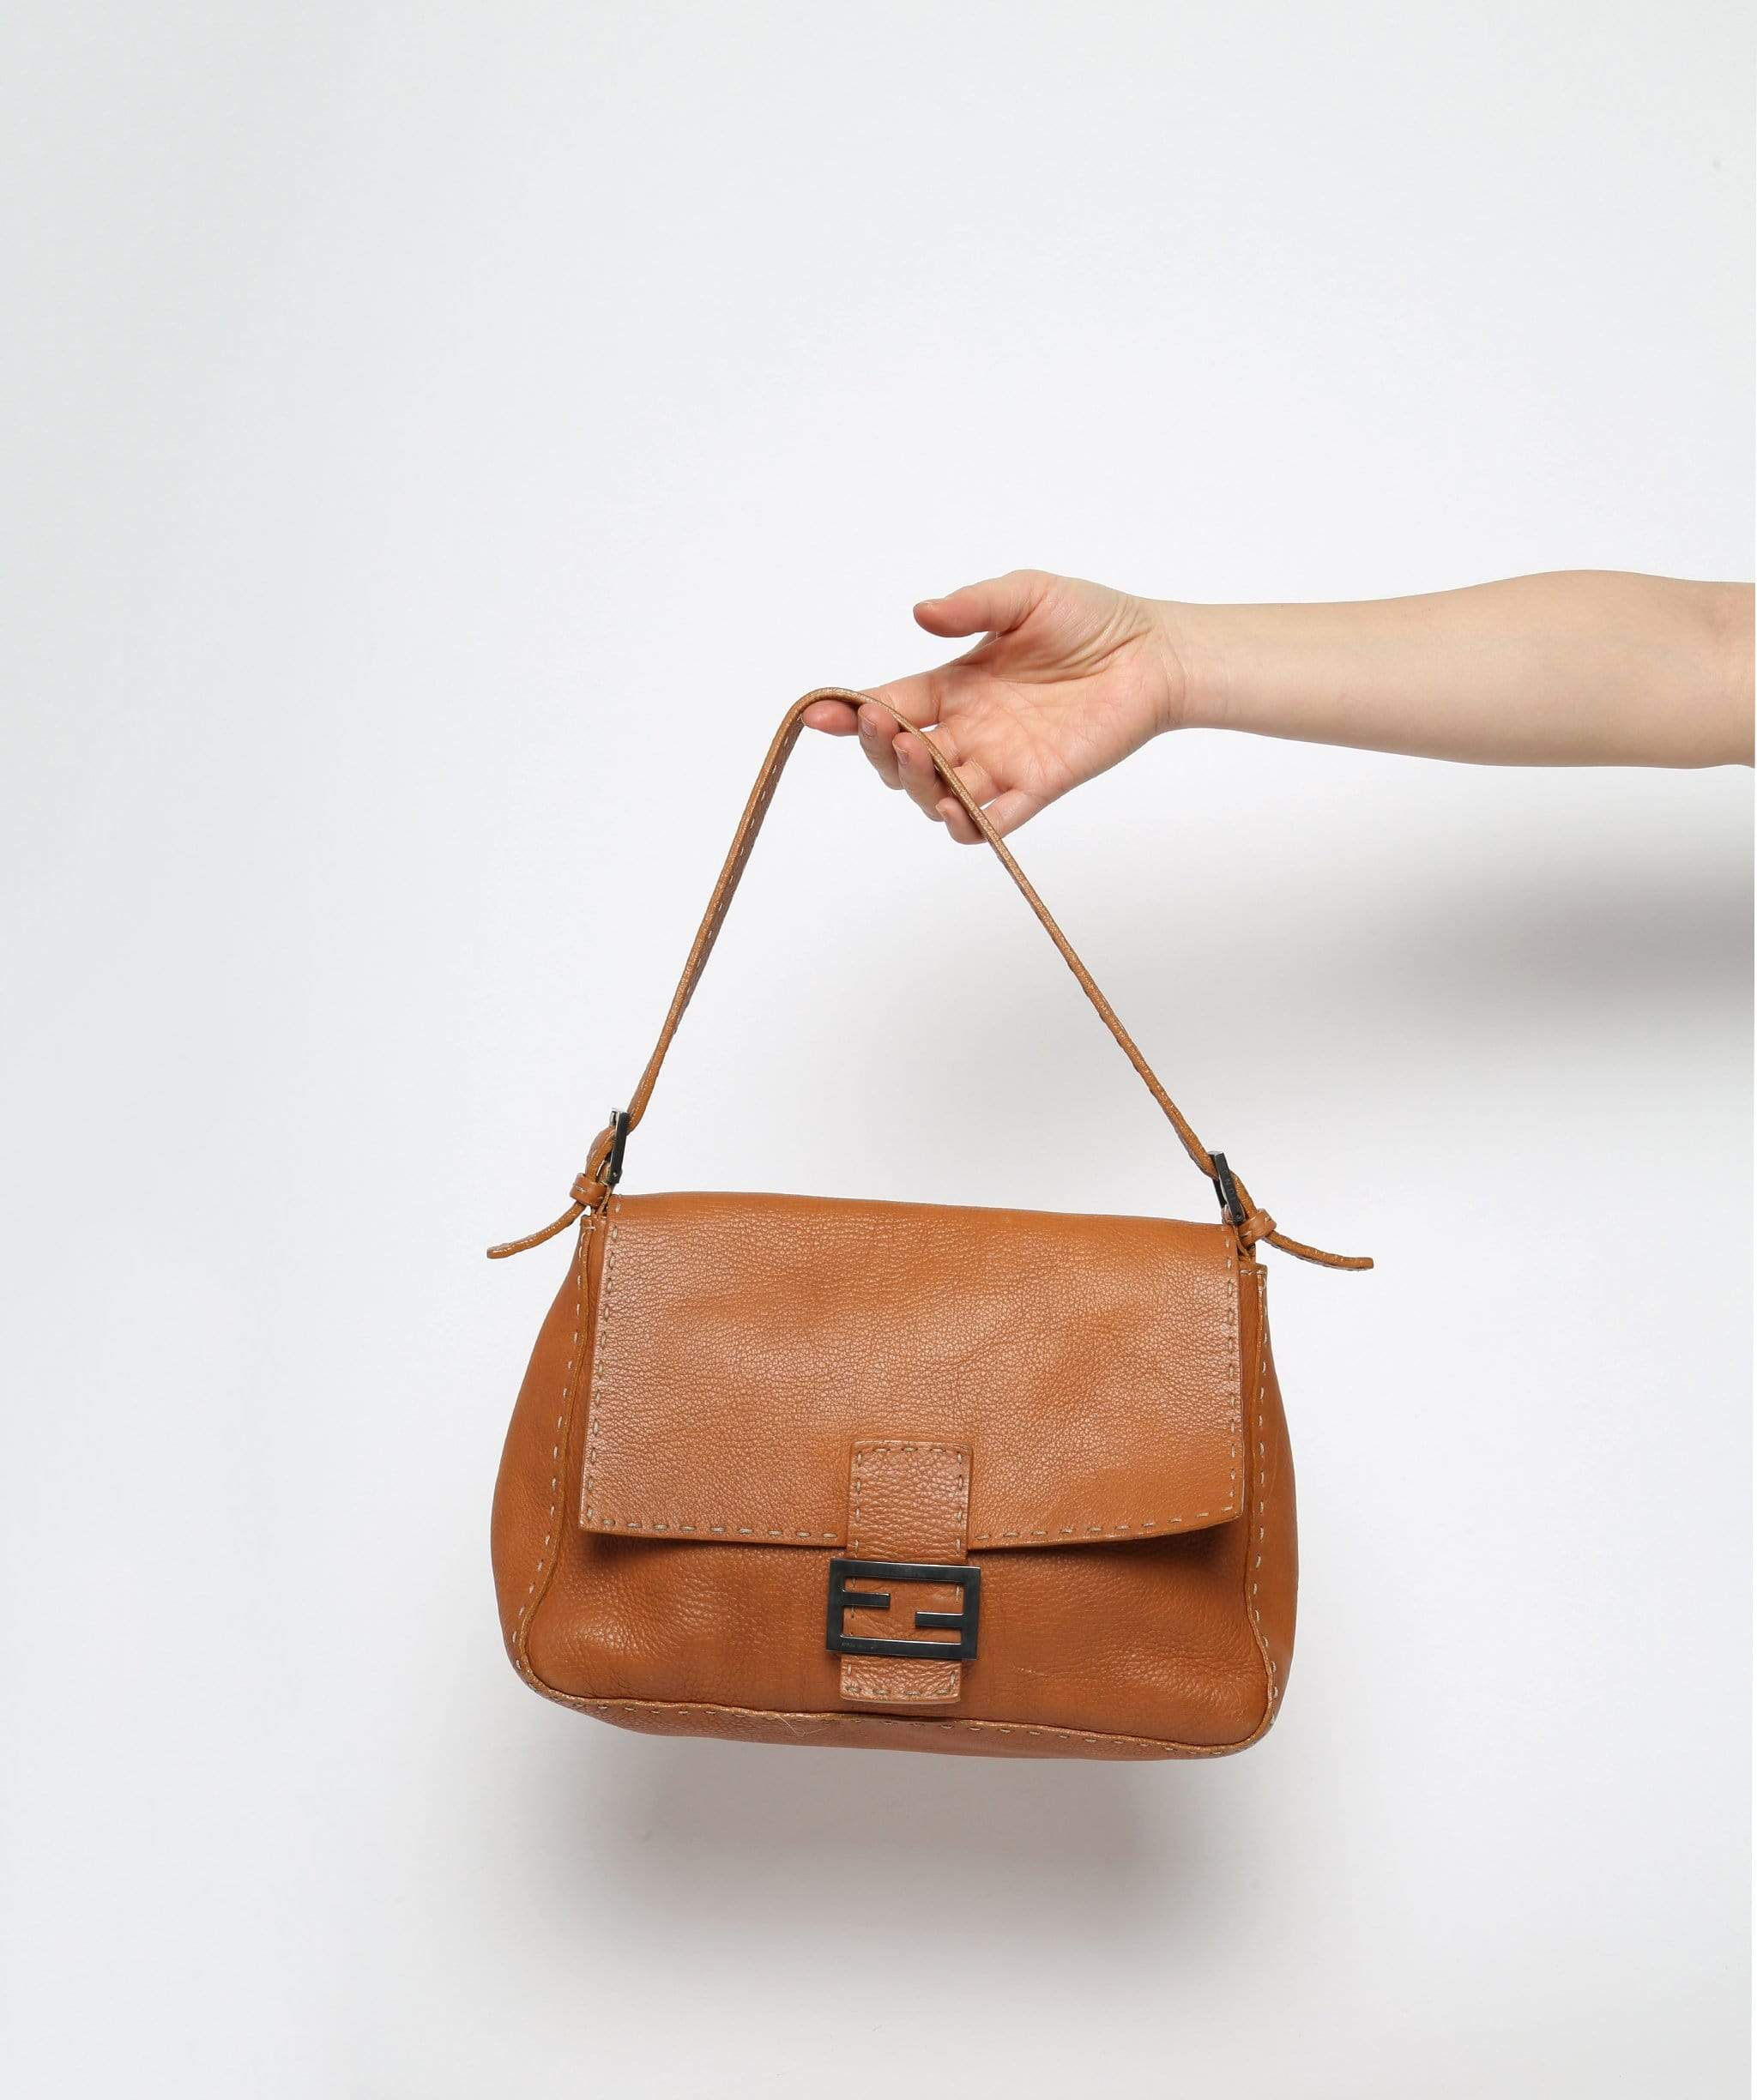 Fendi Fendi Tan Leather Mamma Bag